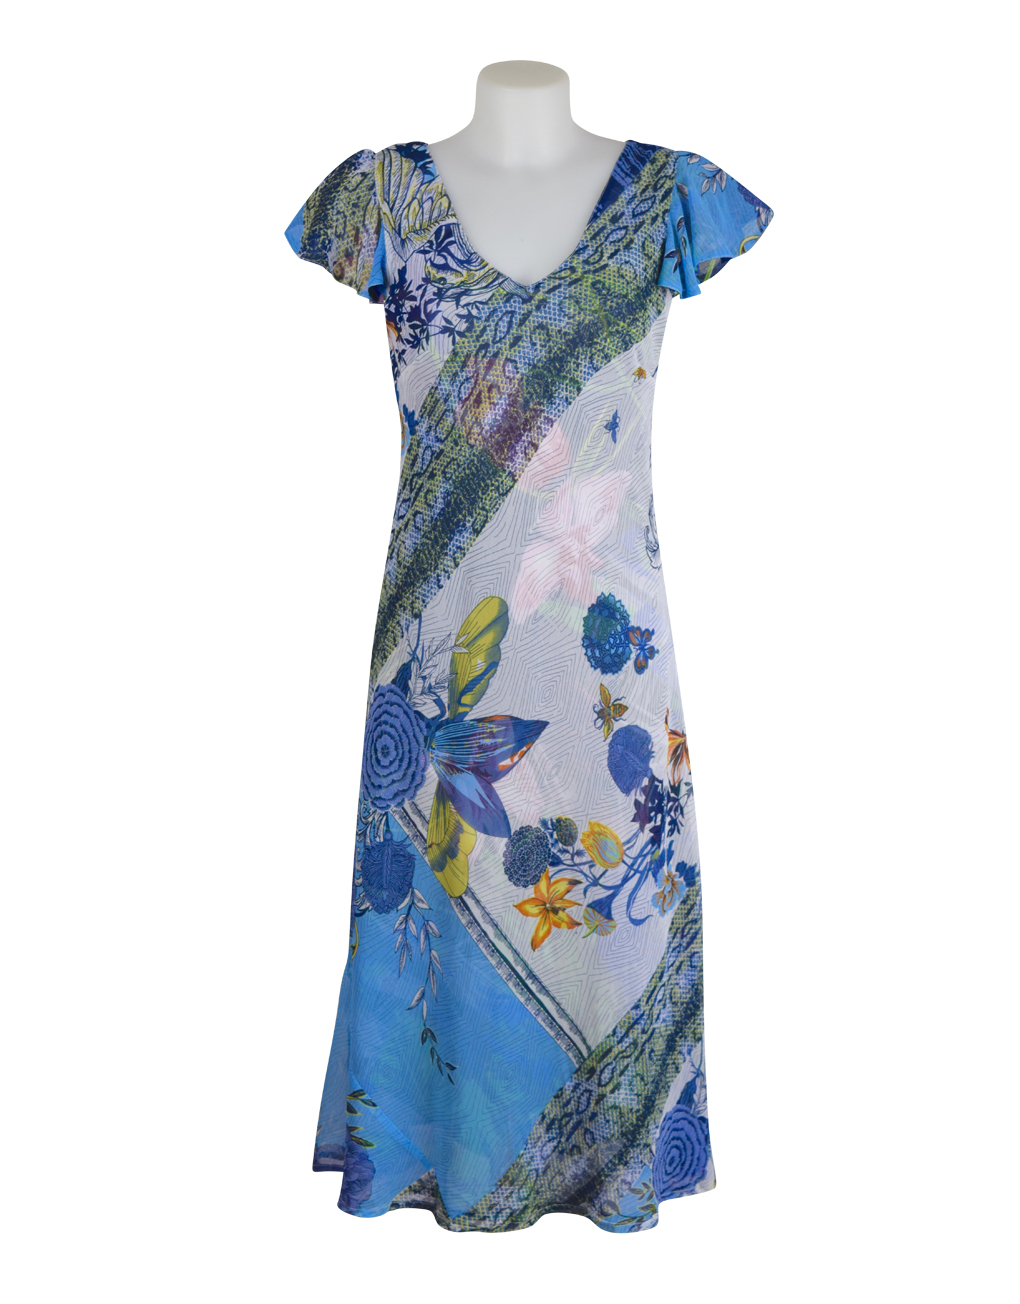 Paramour Reversible Dress Cap Sleeve Blue & White2